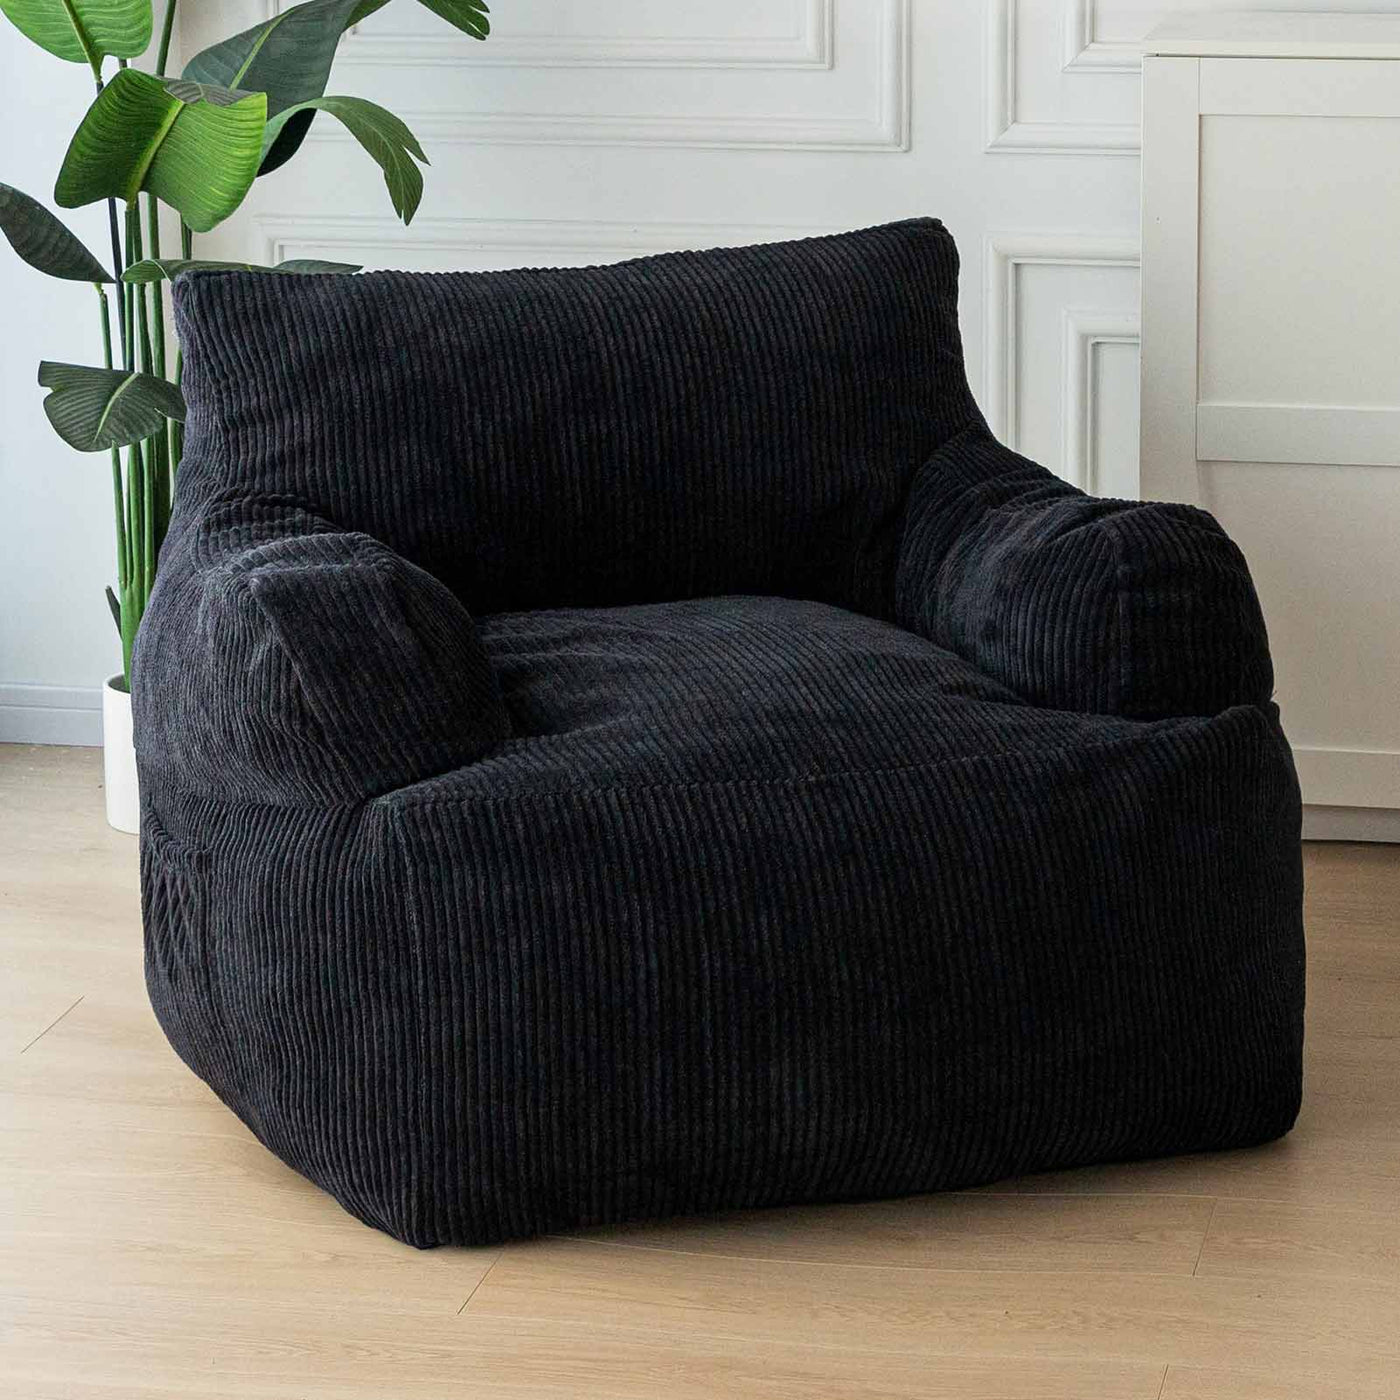 MAXYOYO Giant Bean Bag Chair, Stuffed Bean Bag Couch for Living Room, Black